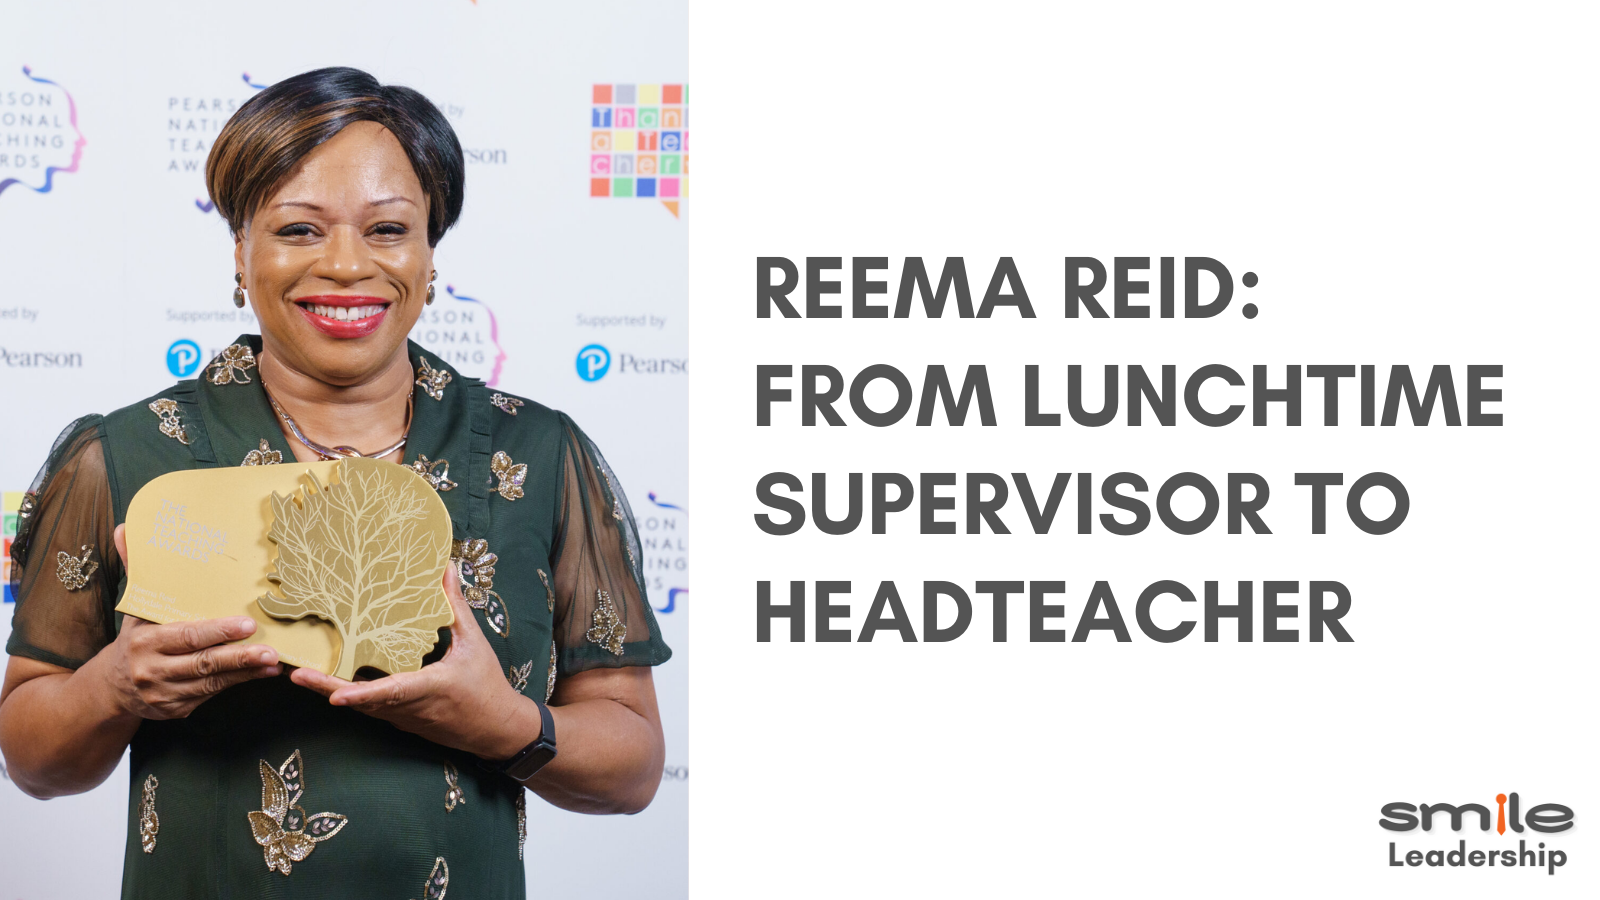 Reema Reid: From Lunchtime Supervisor to Headteacher